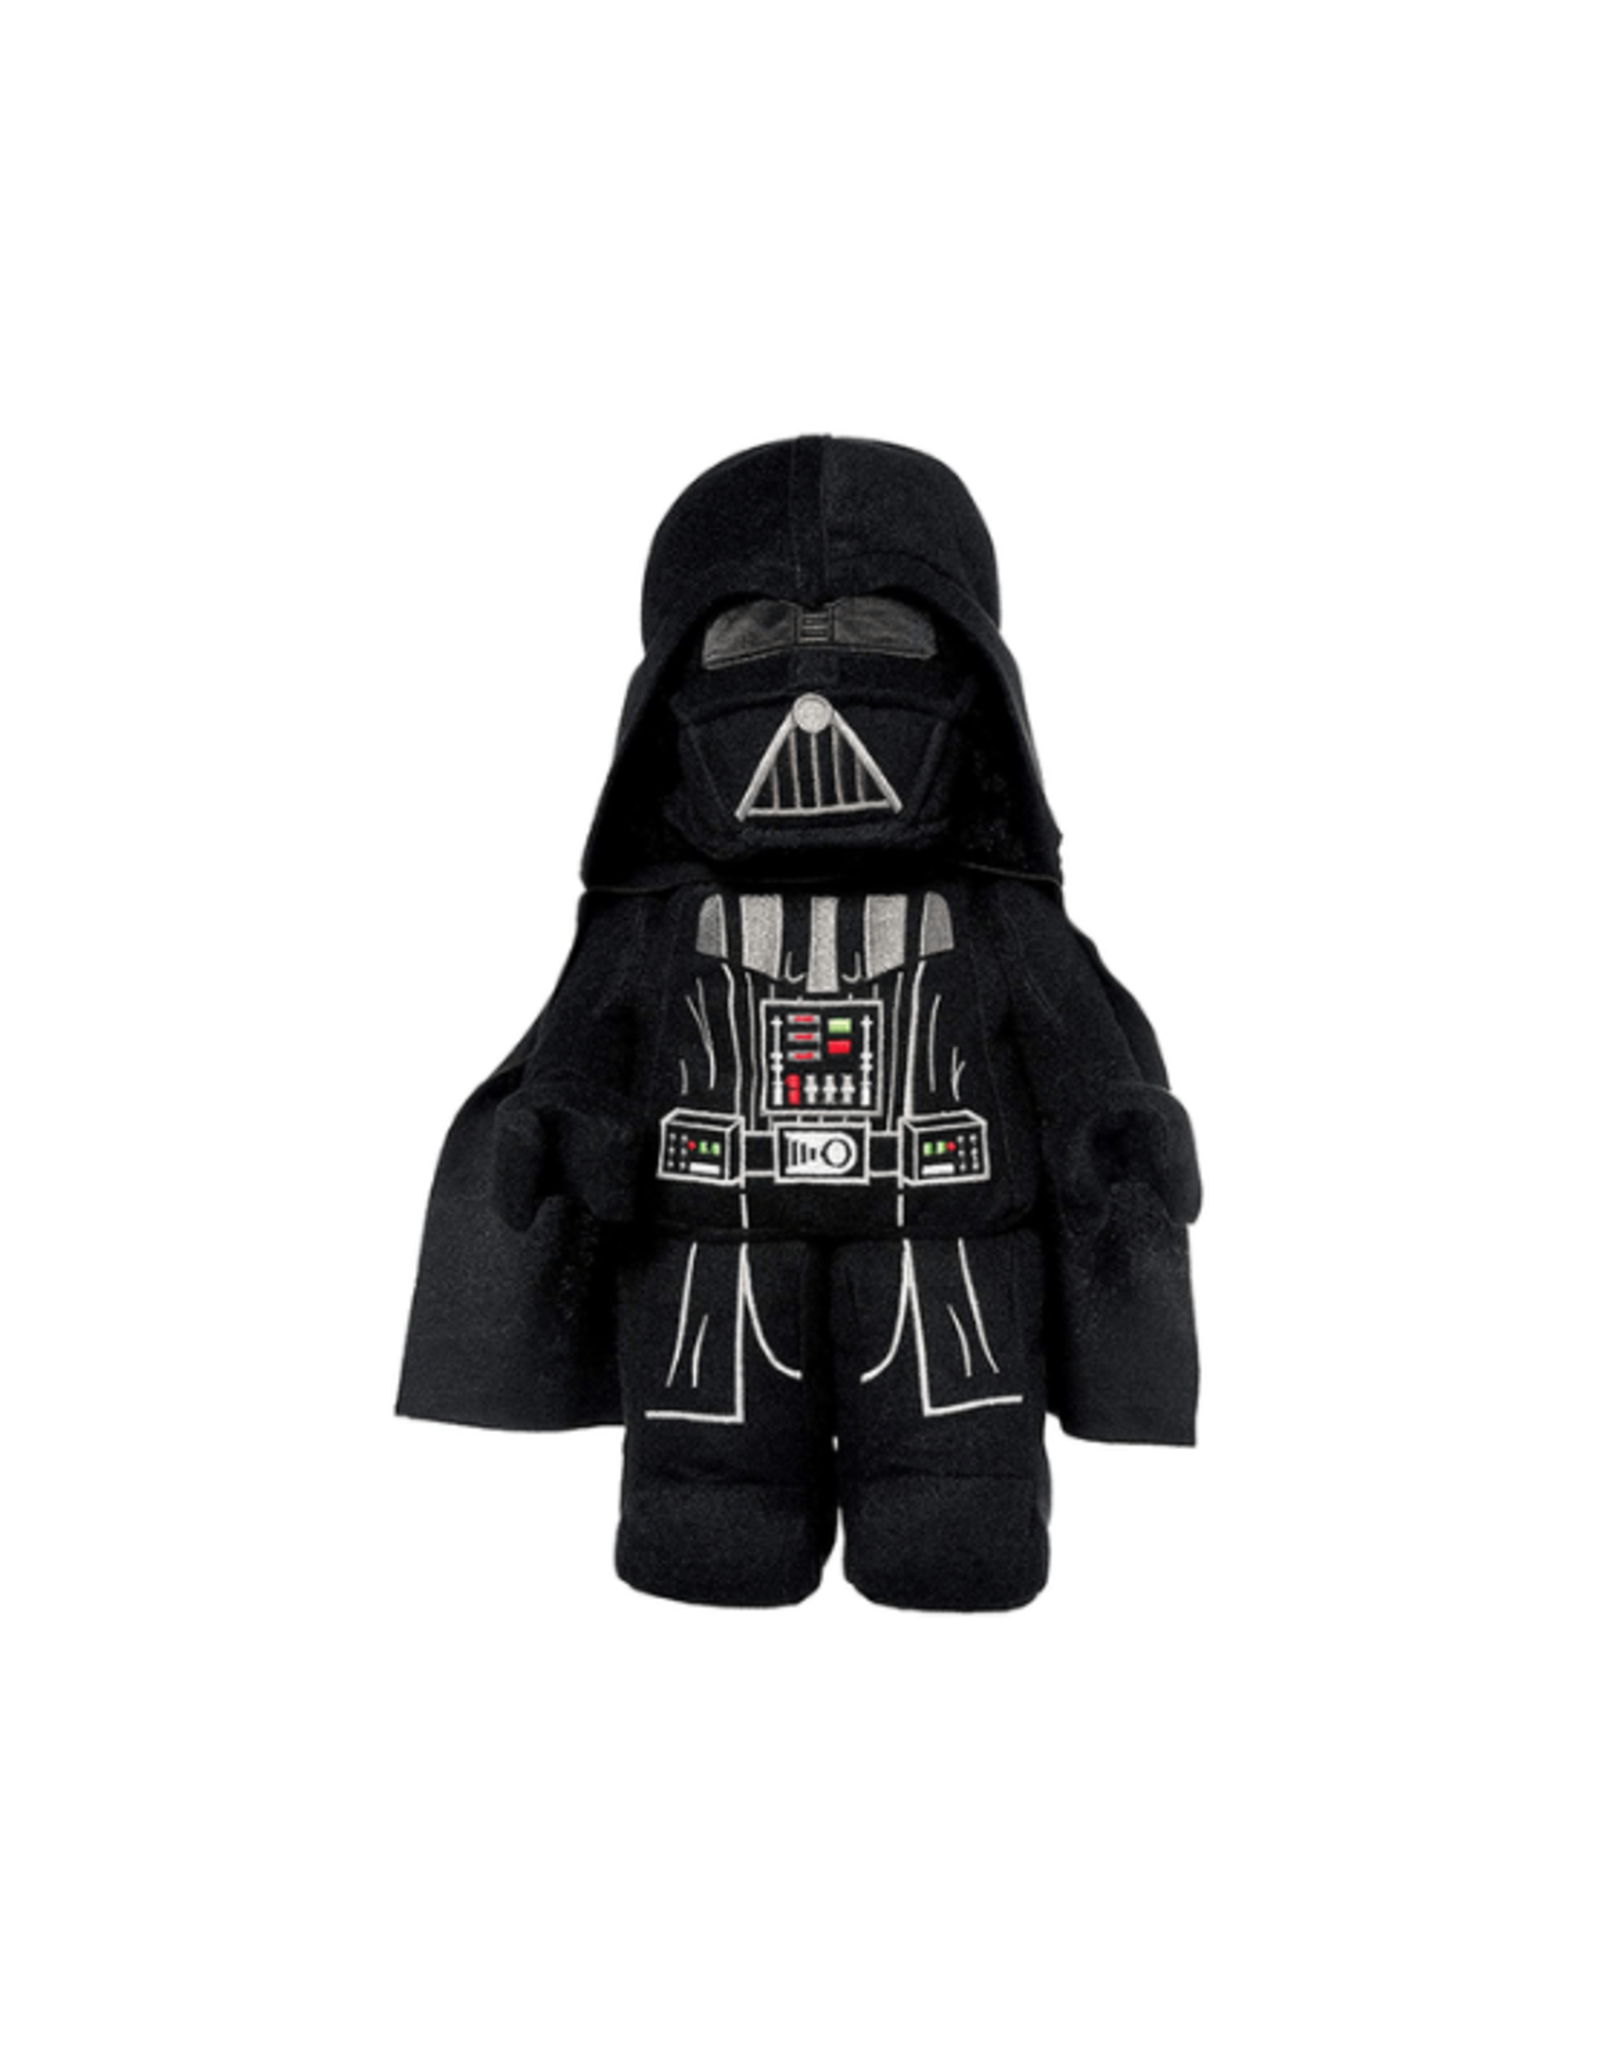 Manhattan Toy Company Manhattan Toy Co. - Plush - Lego Star Wars Darth Vader